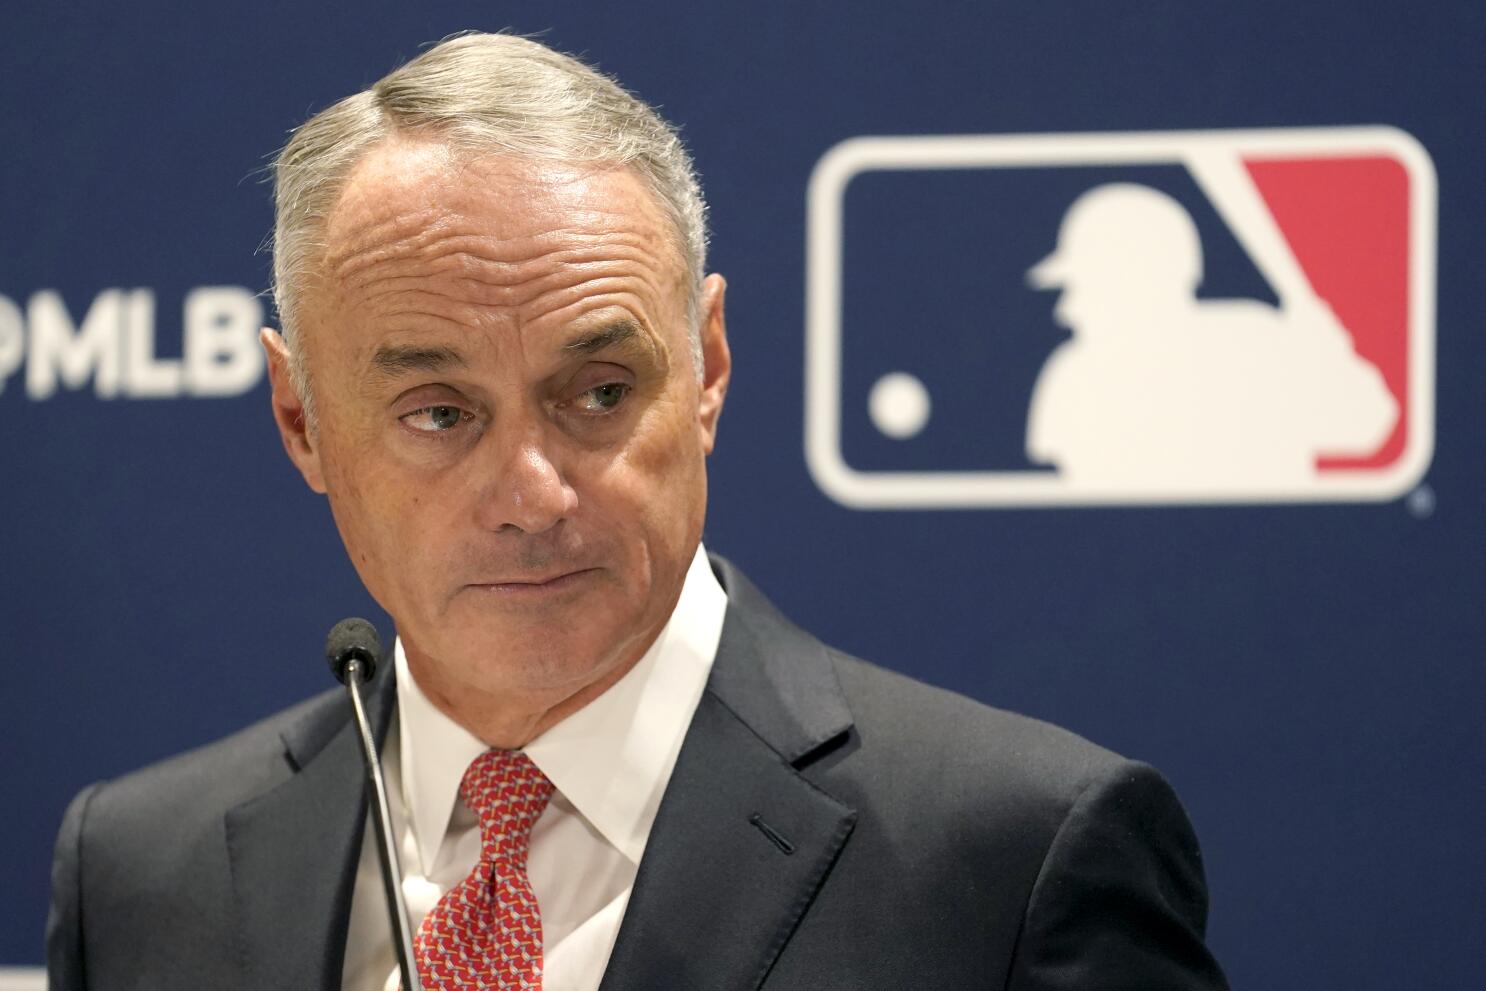 Republicans want to yank baseball's antitrust immunity after MLB